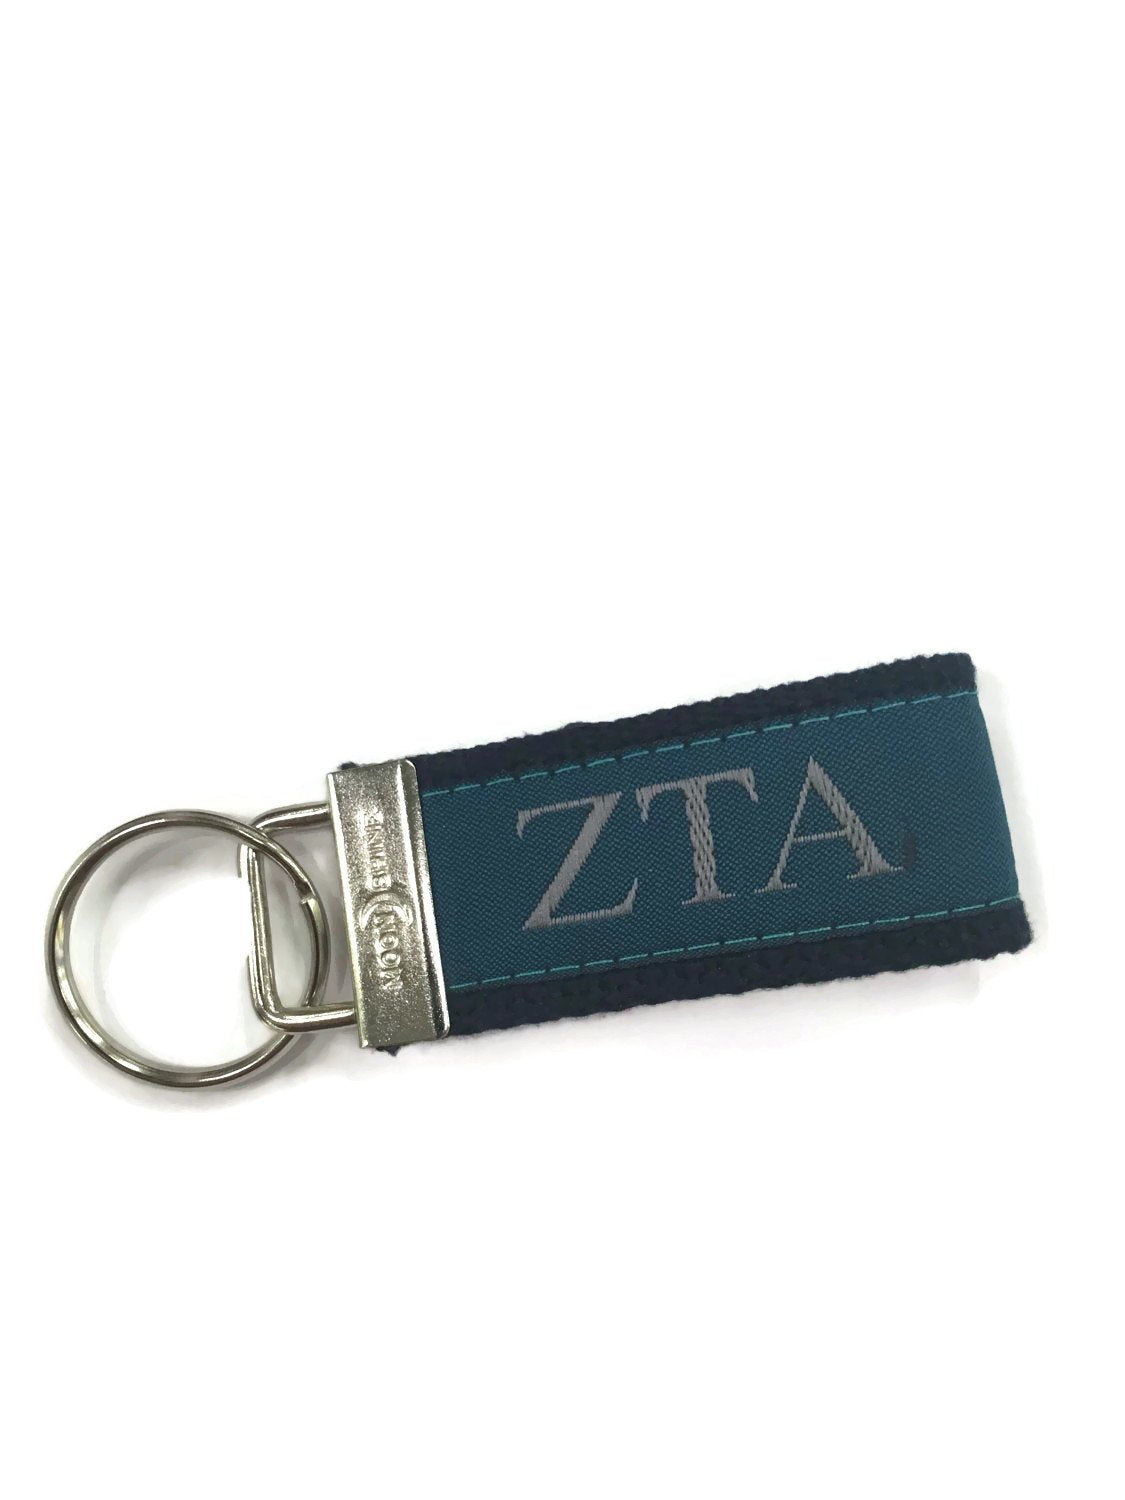 Greek Letter Zeta Tau Alpha ZTA  Sorority Web Key Chain Fob.  Officially Licensed Greek Accessories.